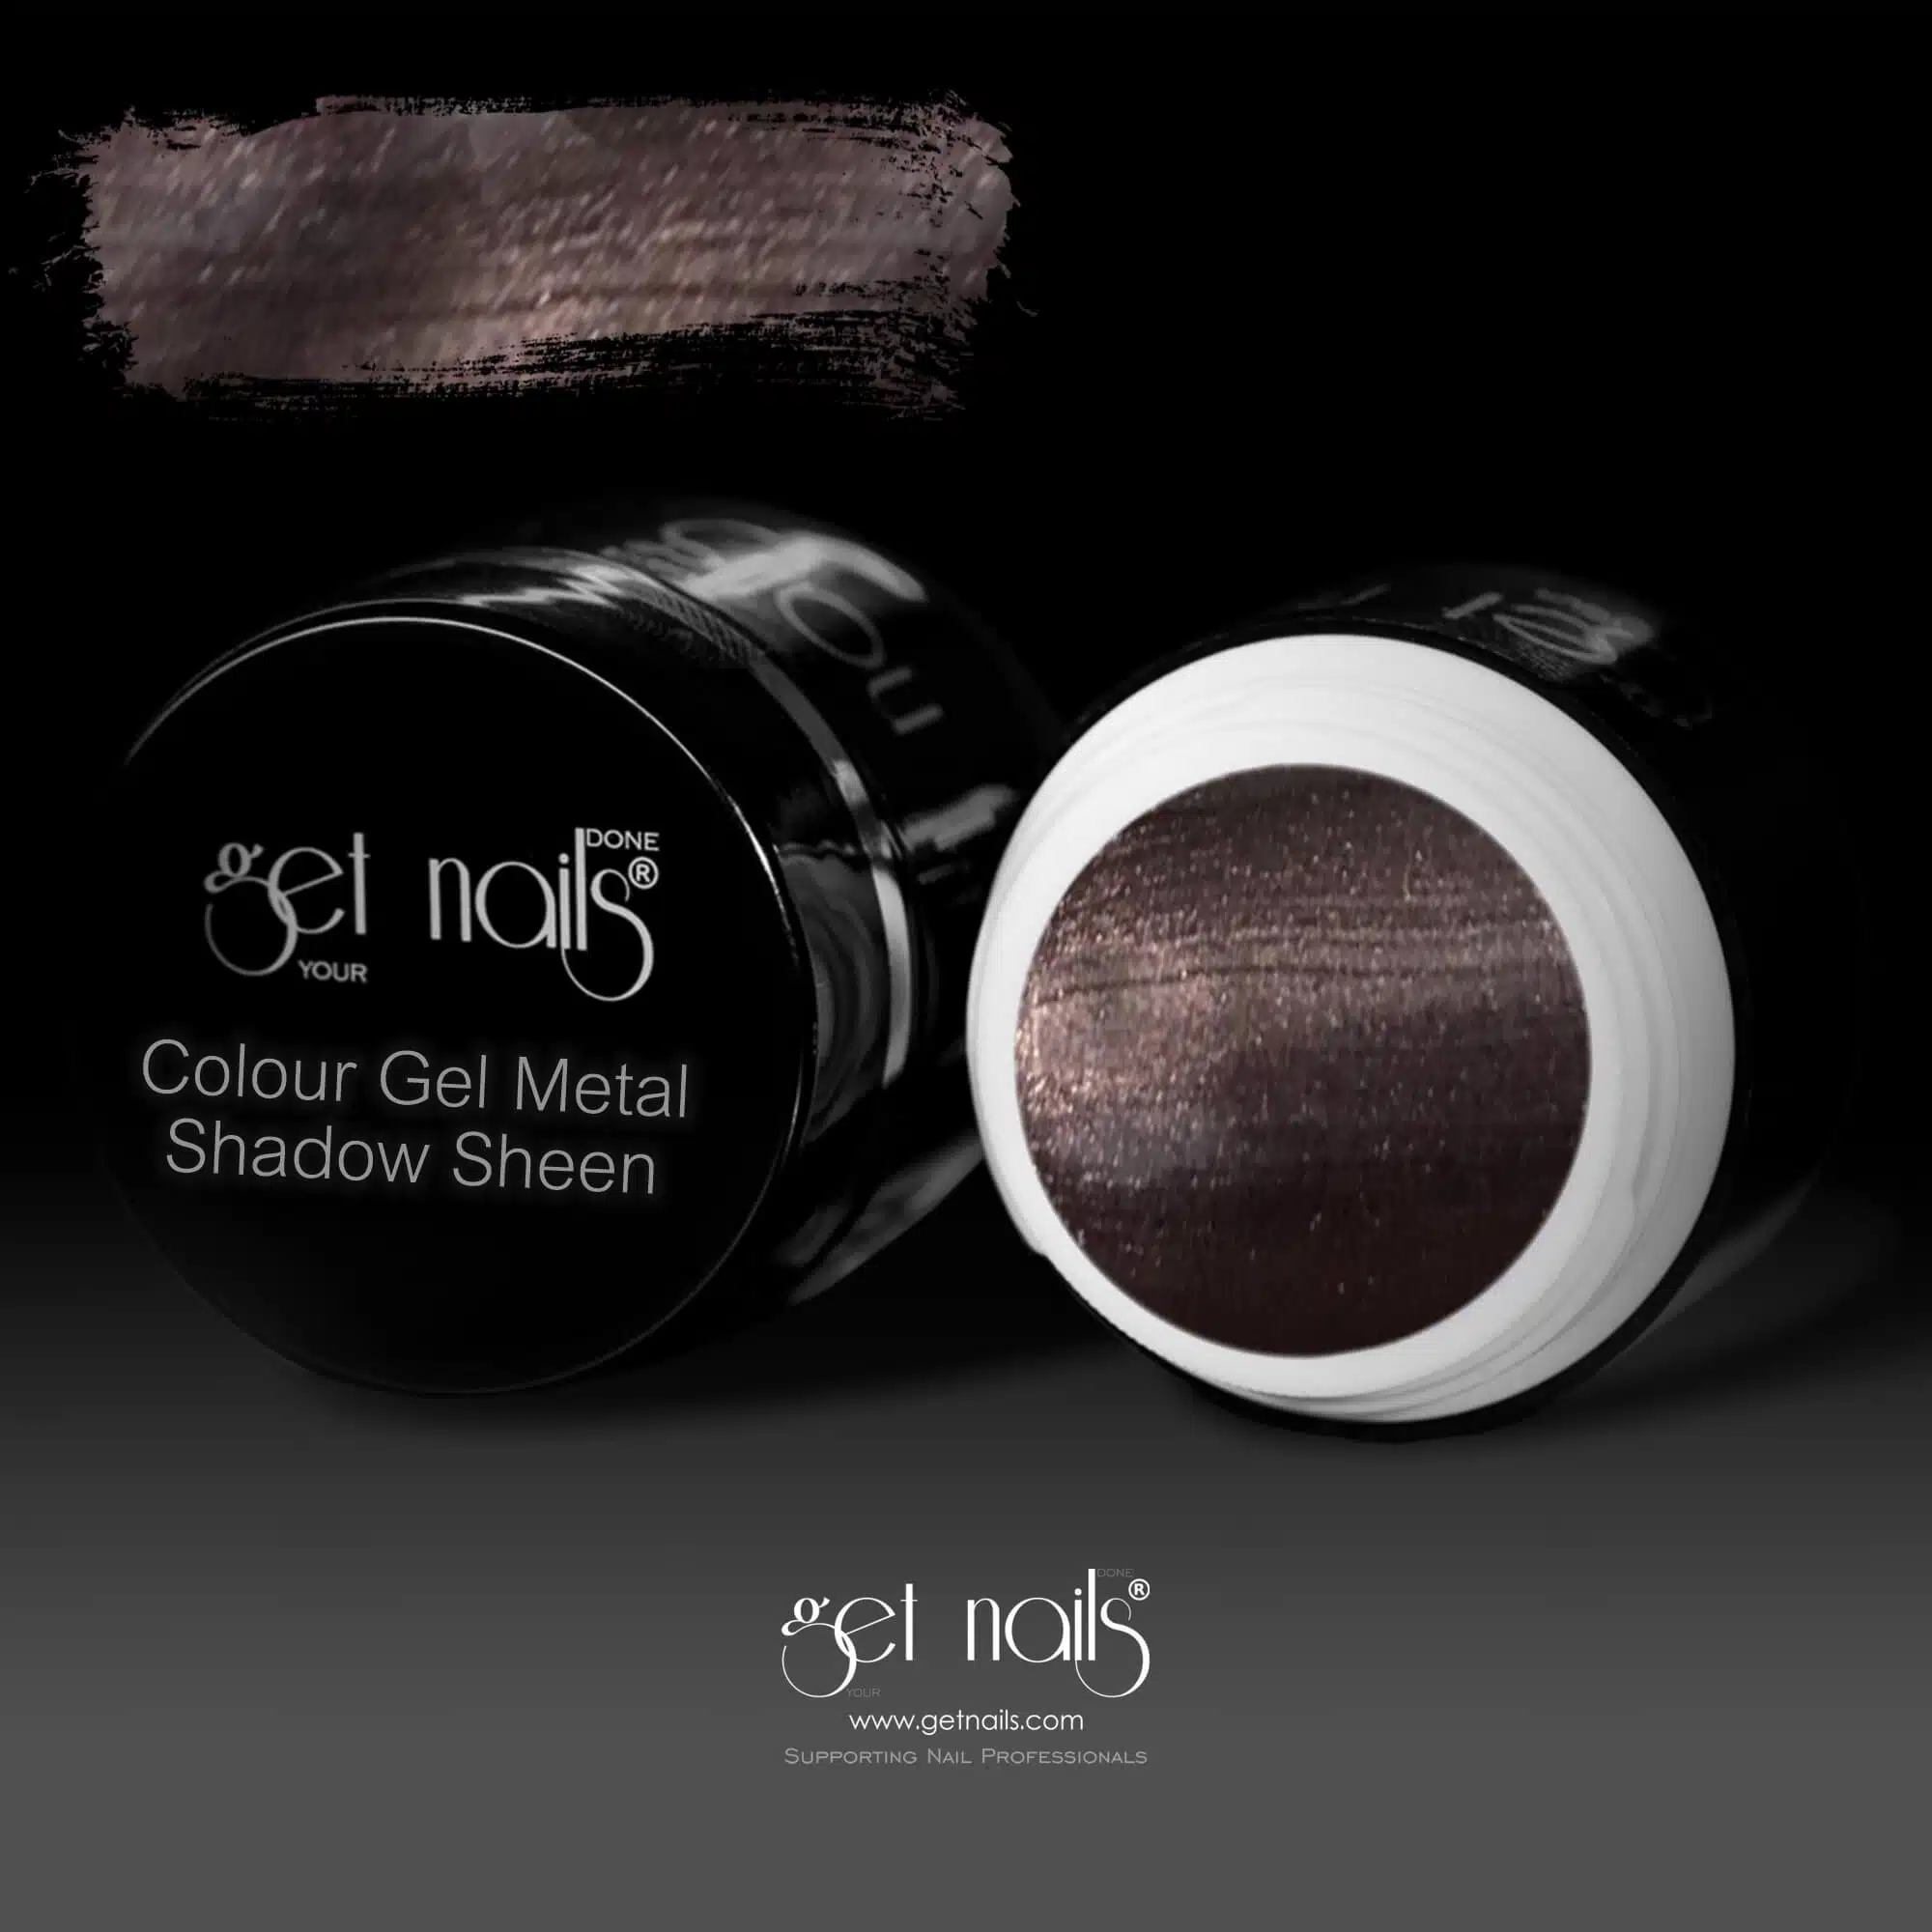 Get Nails Austria - Gel colorato Metal Shadow Sheen 5g